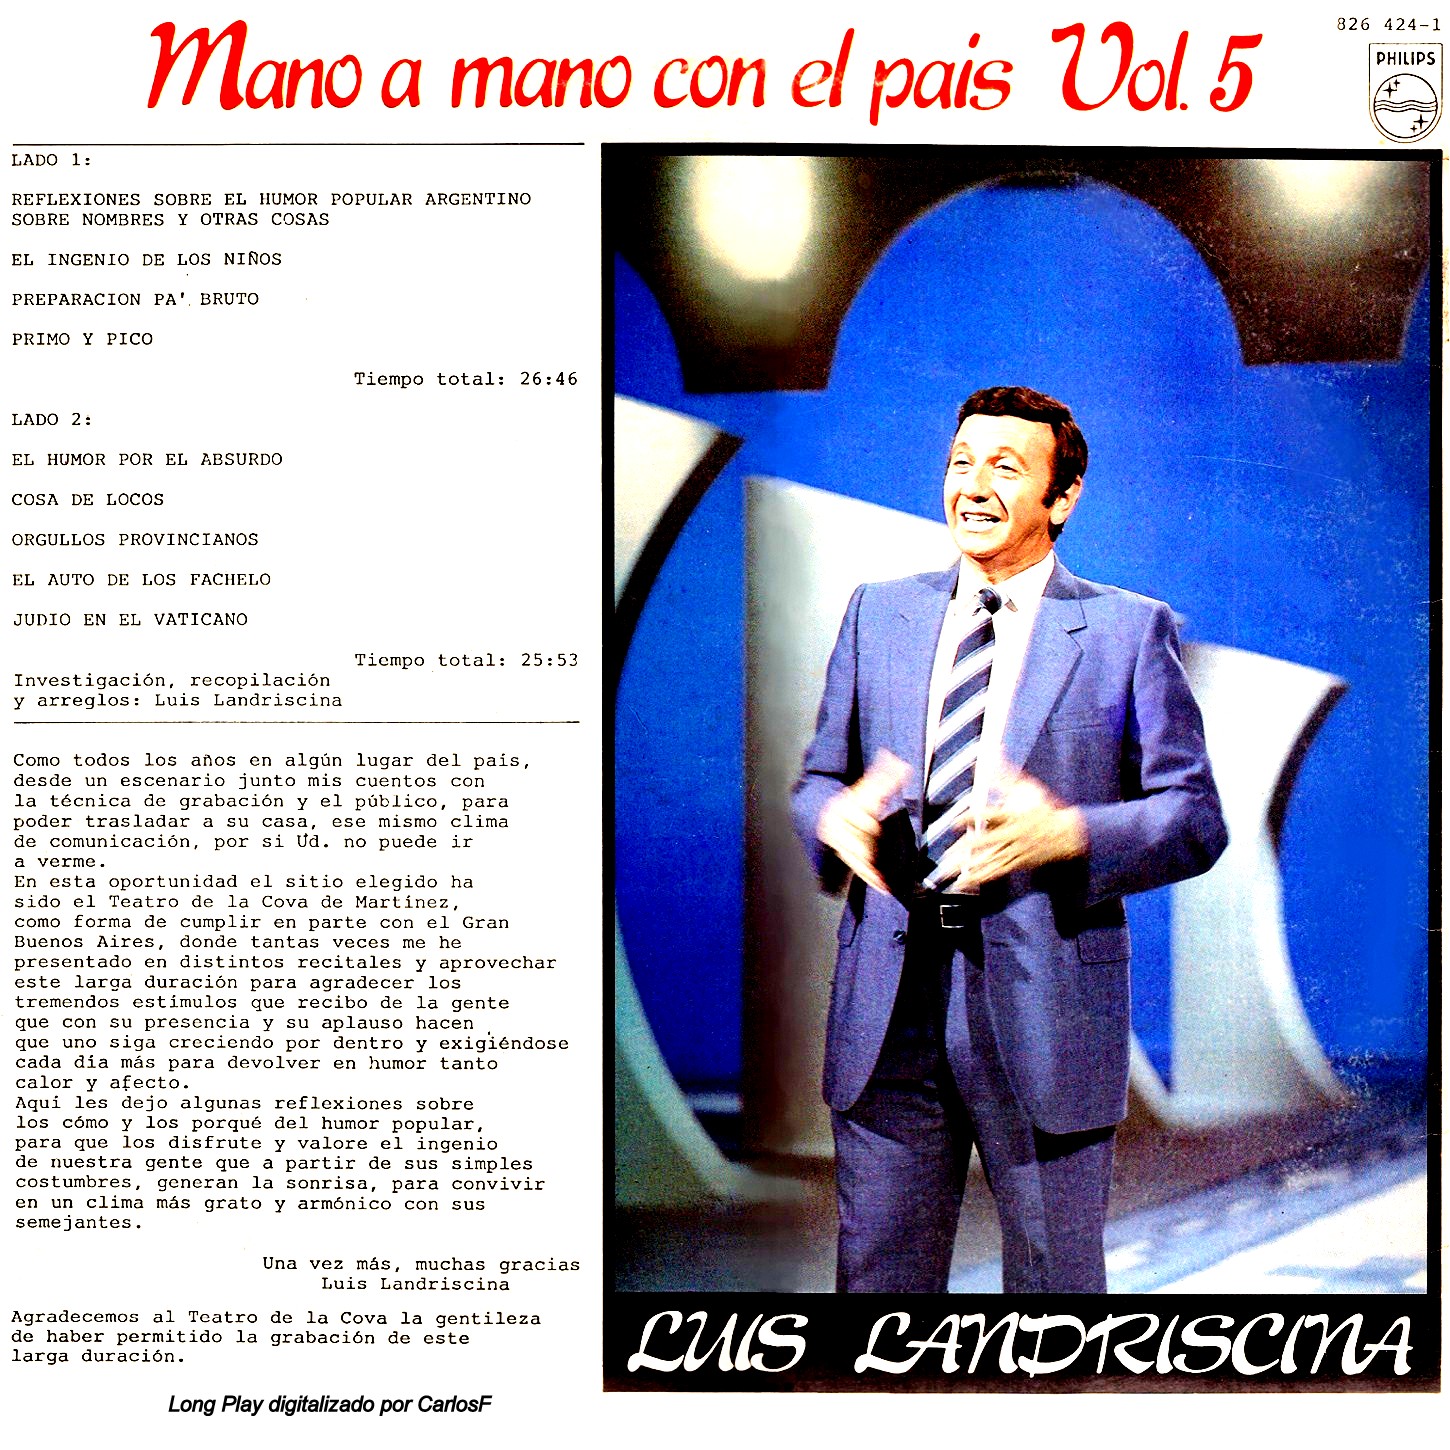 Discografia Luis Landriscina Torrent 1 17l